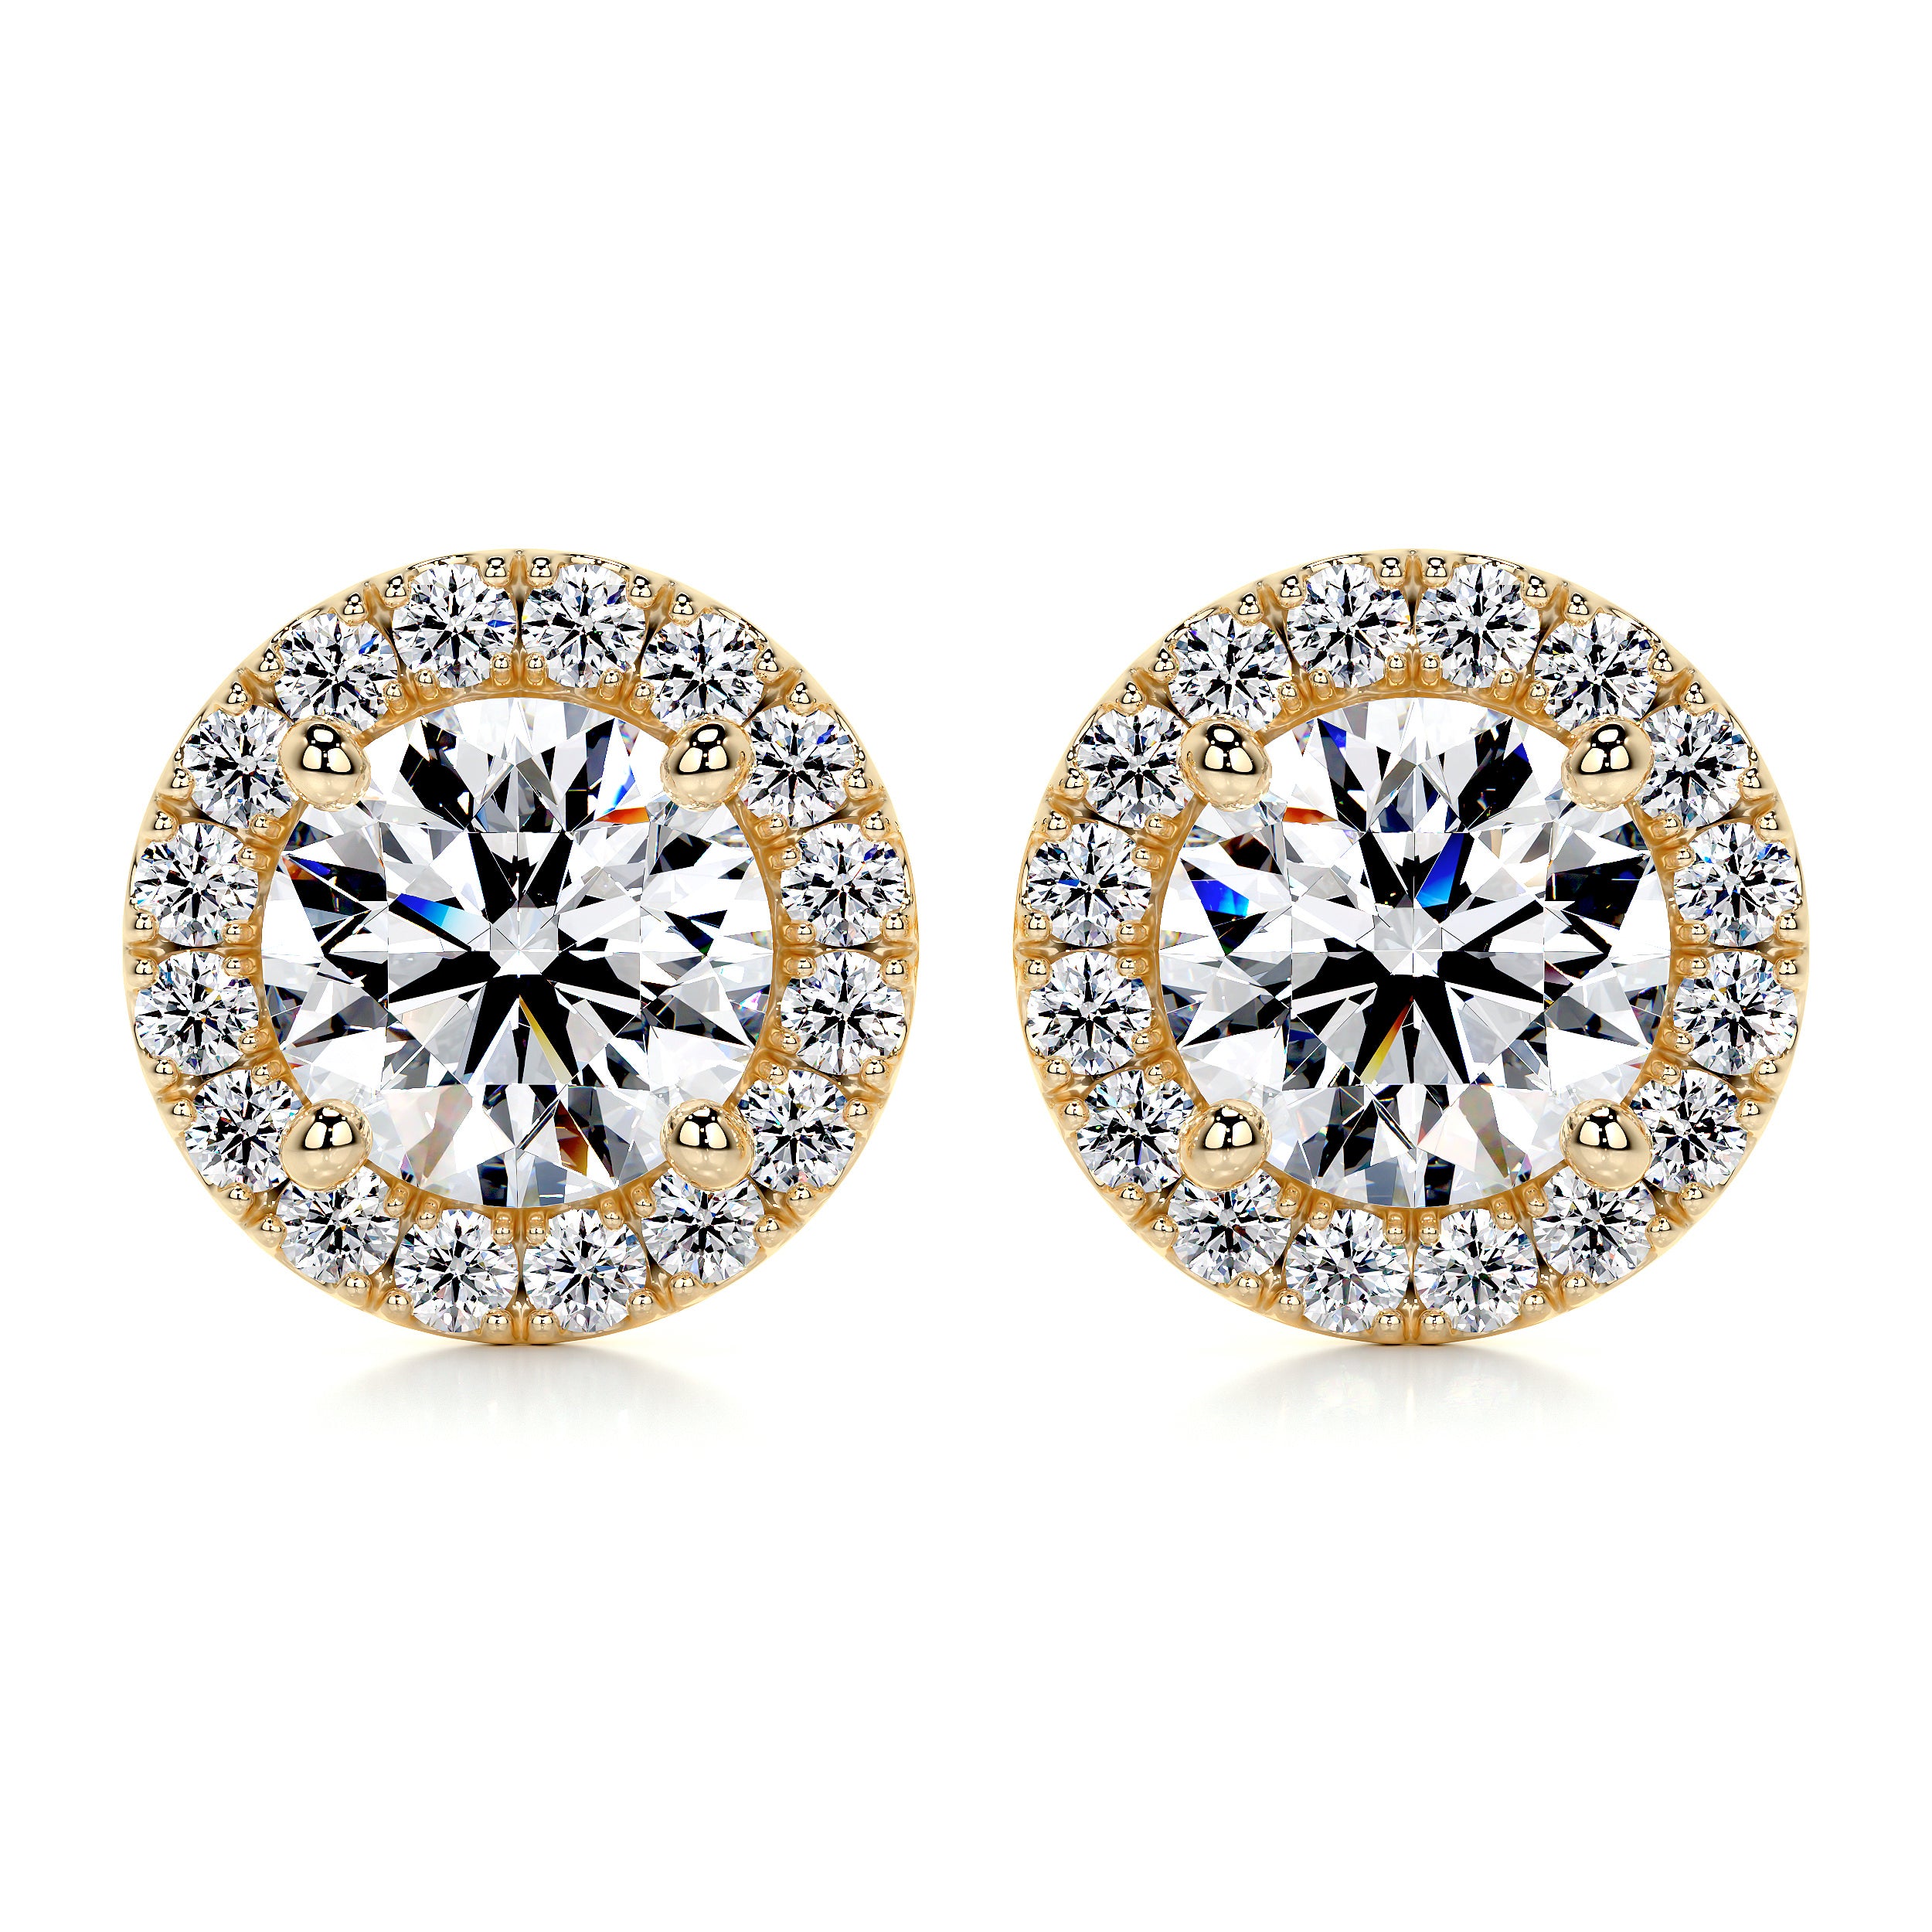 Erica Diamond Earrings   (1 Carat) -18K Yellow Gold